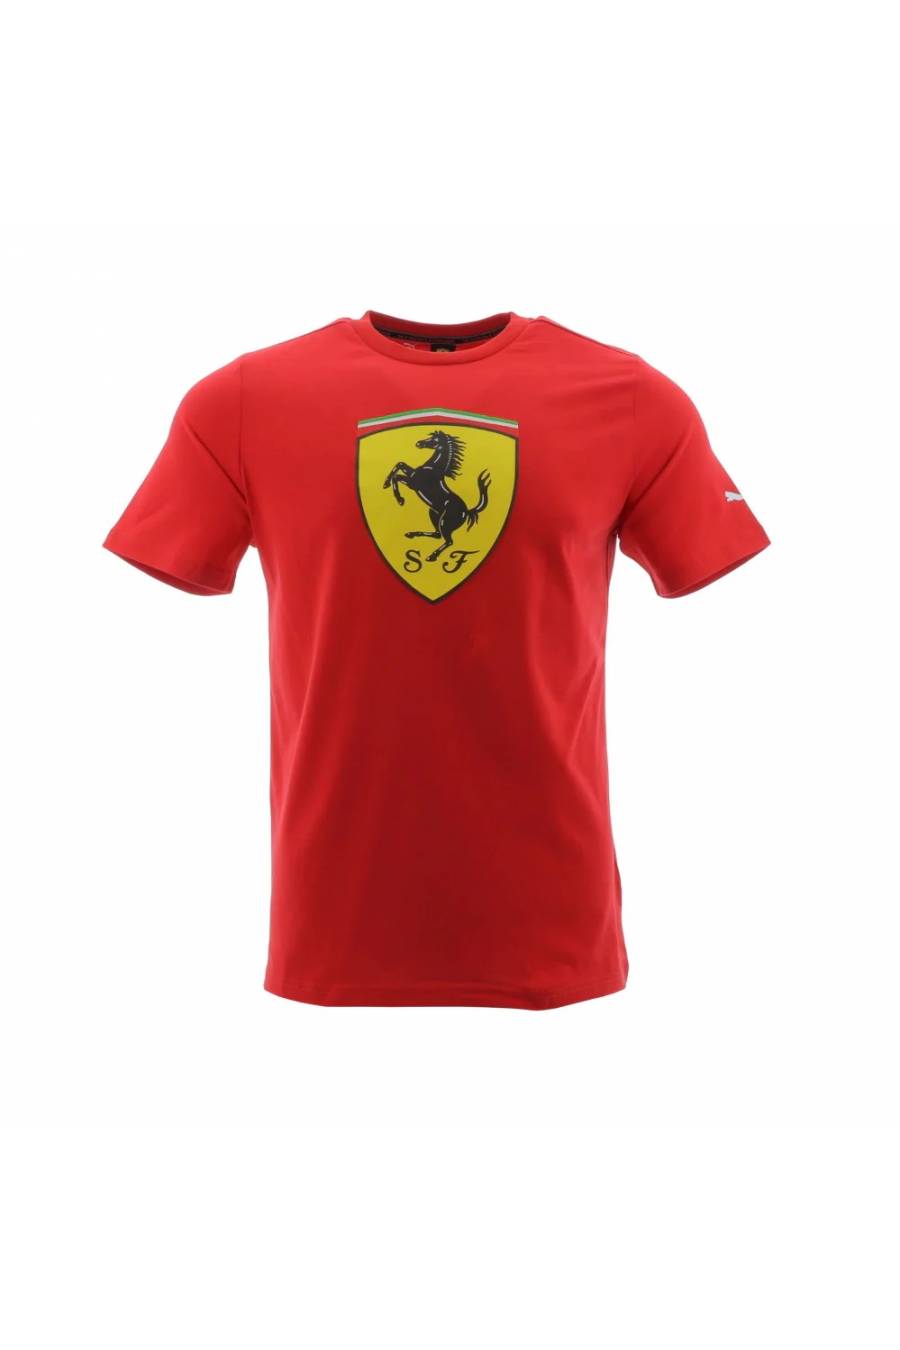 Camiseta Puma Ferrari Race Big Shield 538175-02